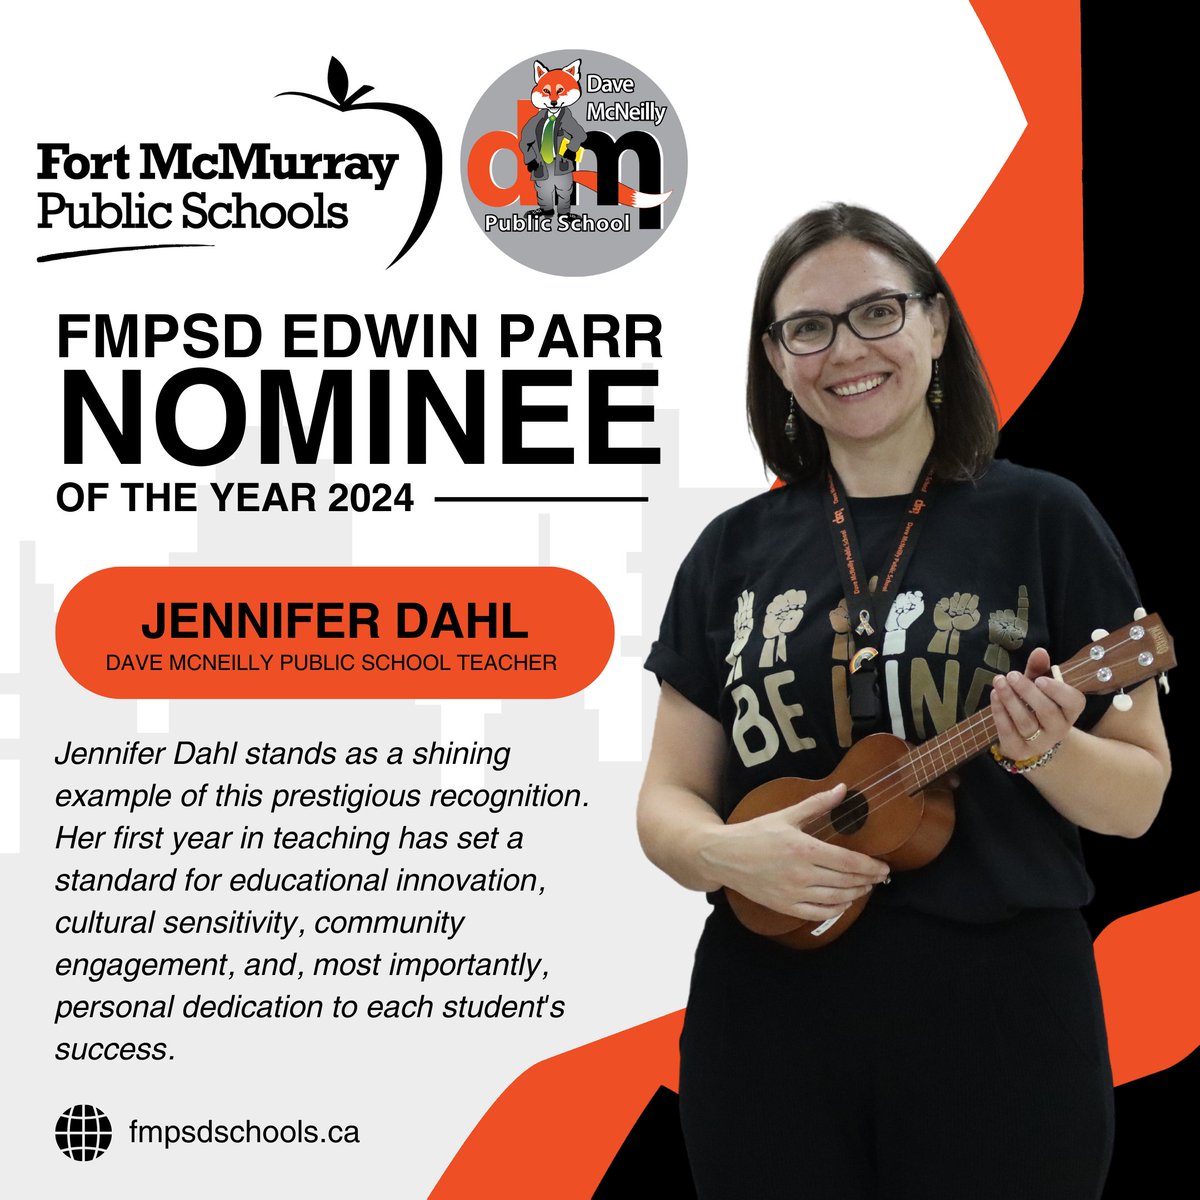 FMPSD is proud to announce that Jennifer Dahl, a @McNeillyfmpsd teacher, has earned a prestigious nomination for the Alberta School Boards Association's (ASBA) Edwin Parr Teacher Award.

To read more: bit.ly/3QnLeDo

@annaleeskinner @LindaMywaart
#FMPSD #YMM #RMWB